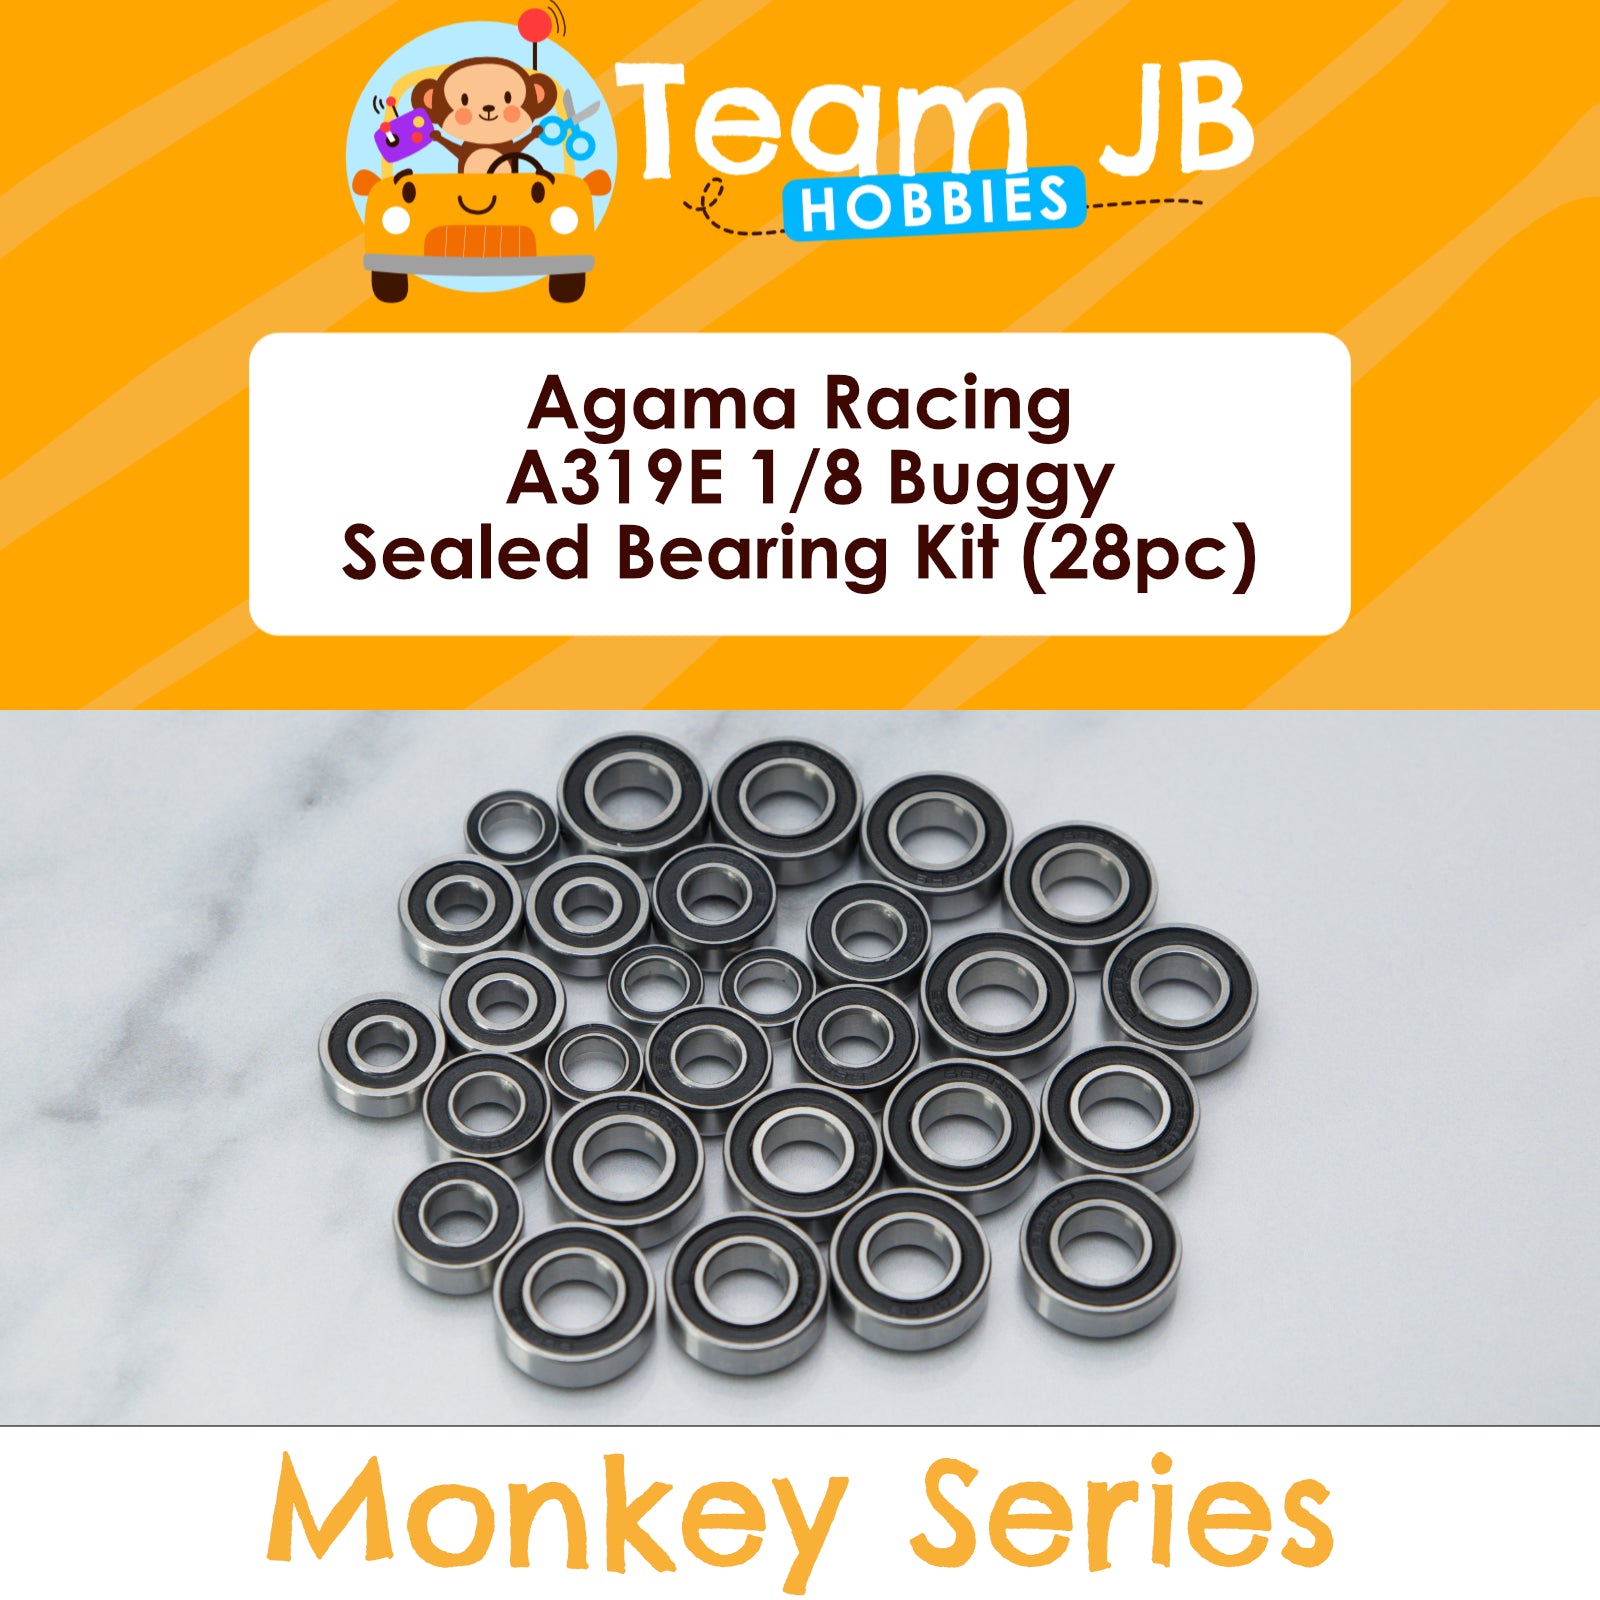 Agama Racing A319E 1/8 Buggy - Sealed Bearing Kit